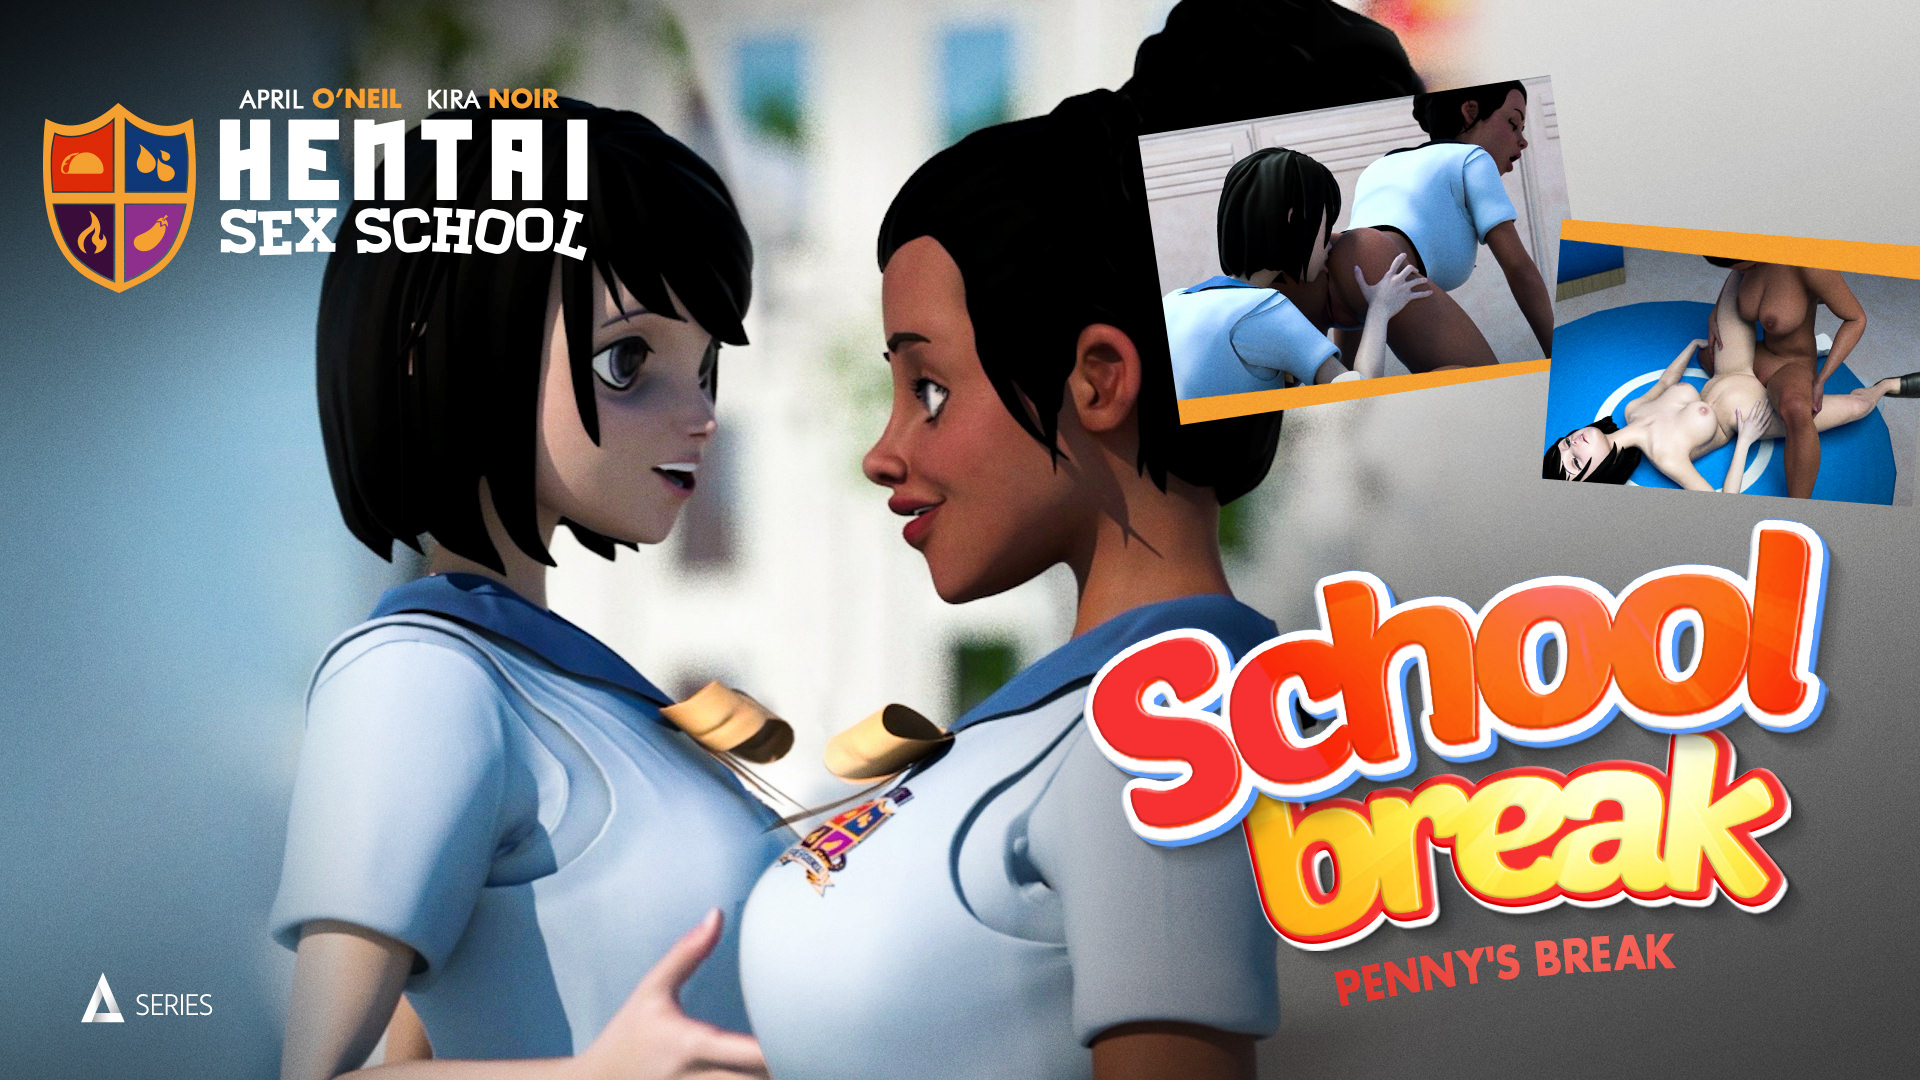 55197 01 01 - Hentai Sex School Episode 8: Penny's Break - April ONeil &amp; Kira Noir